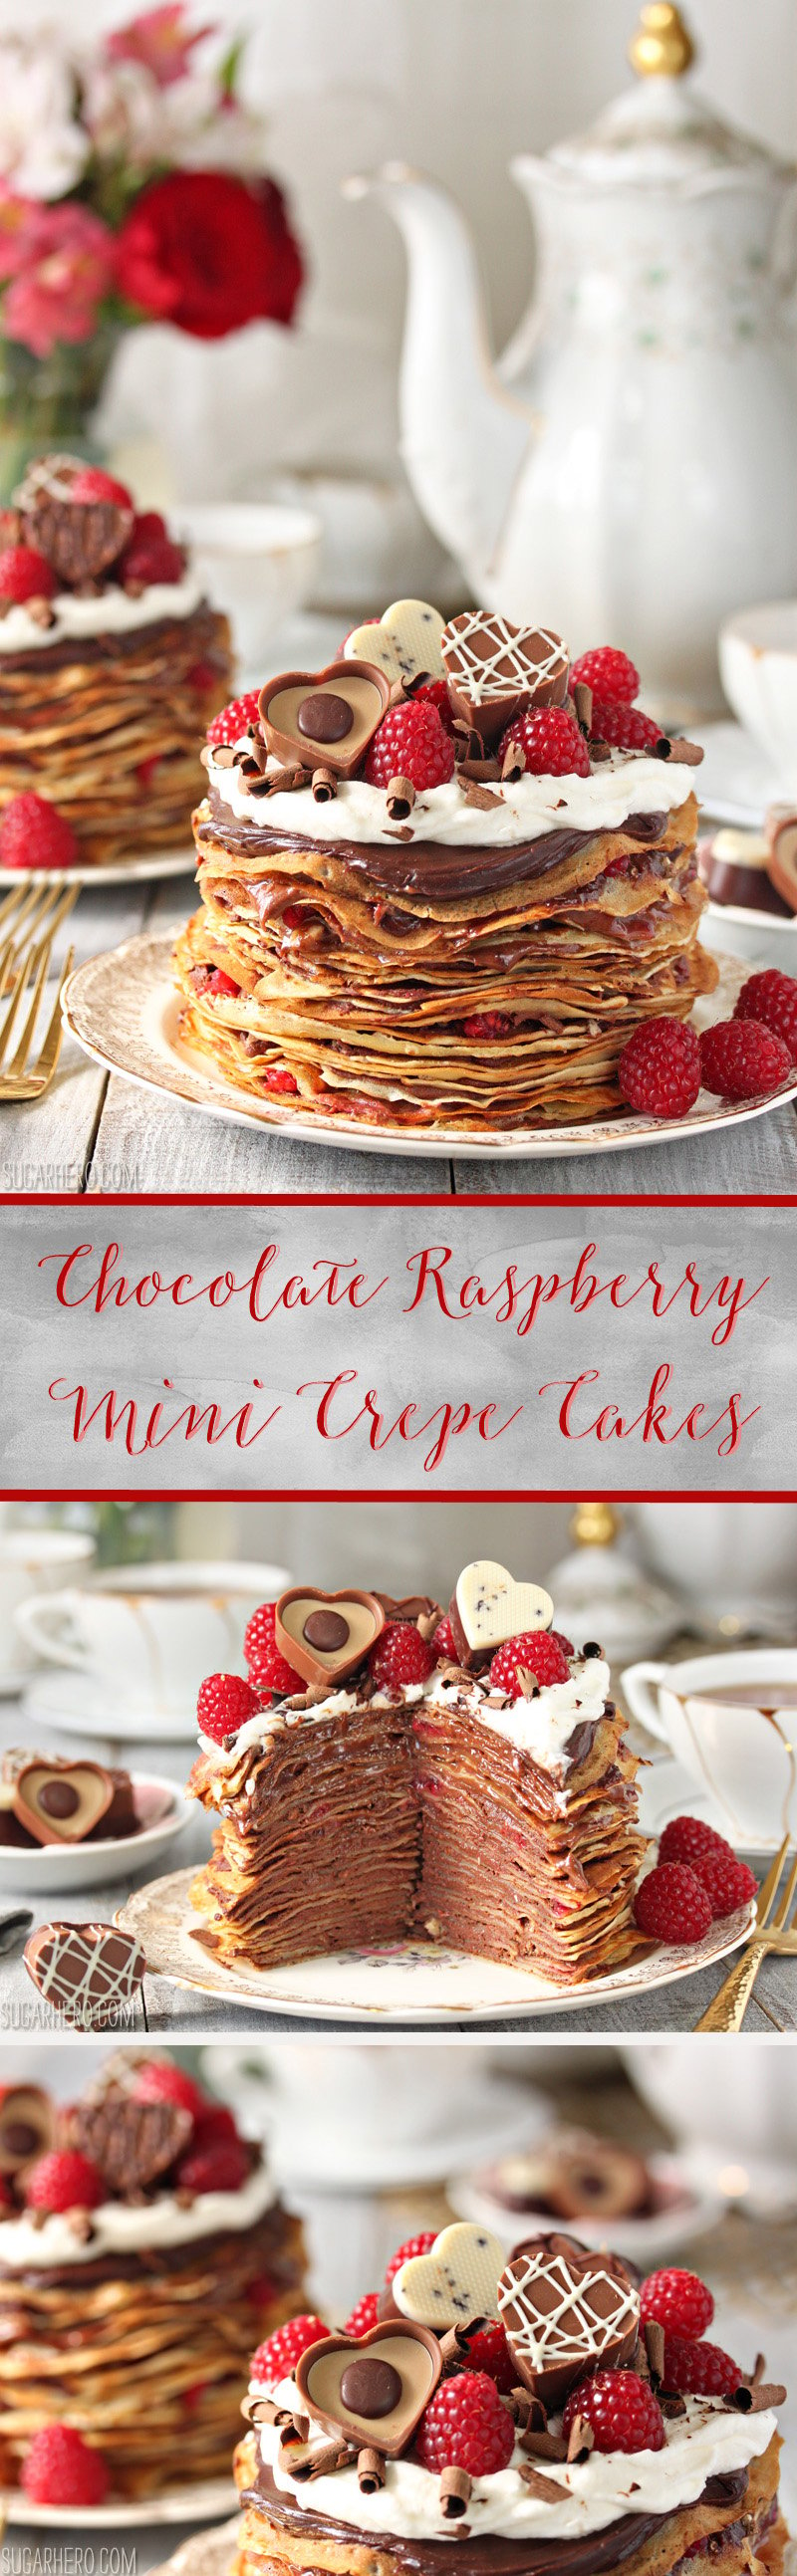 Chocolate Raspberry Mini Crepe Cakes - gorgeous mini cakes made with crepes, chocolate, and raspberries! | From SugarHero.com